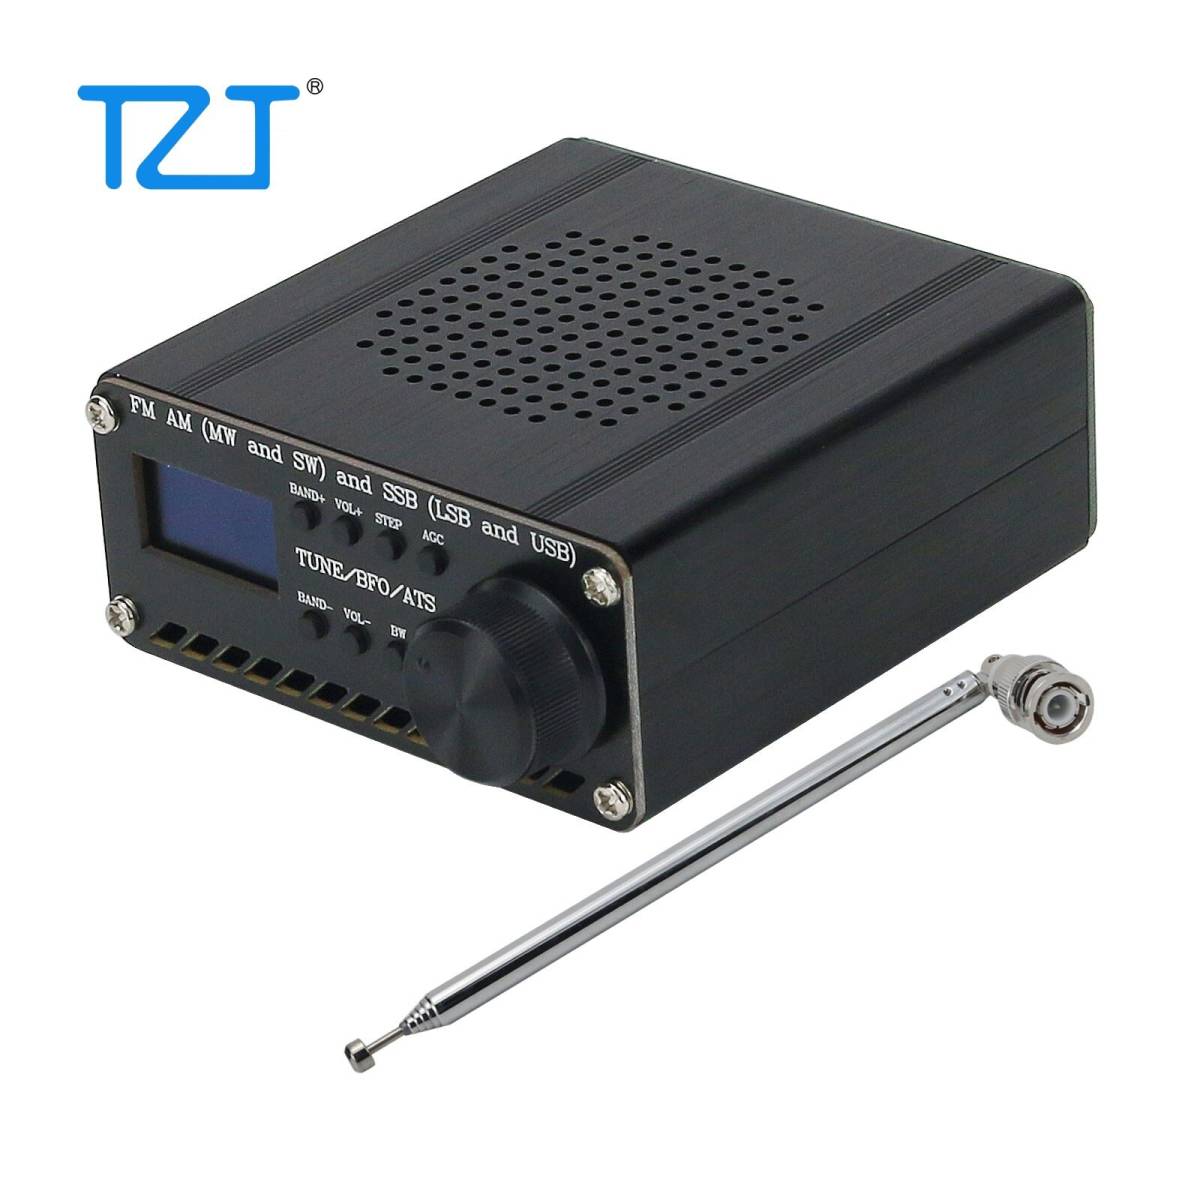 SI4732すべて バンド無線受信機FM AM (MW & SW) SSB (LSB & USB) リチウムバッテリー + アンテナ + スピーカー + ケース